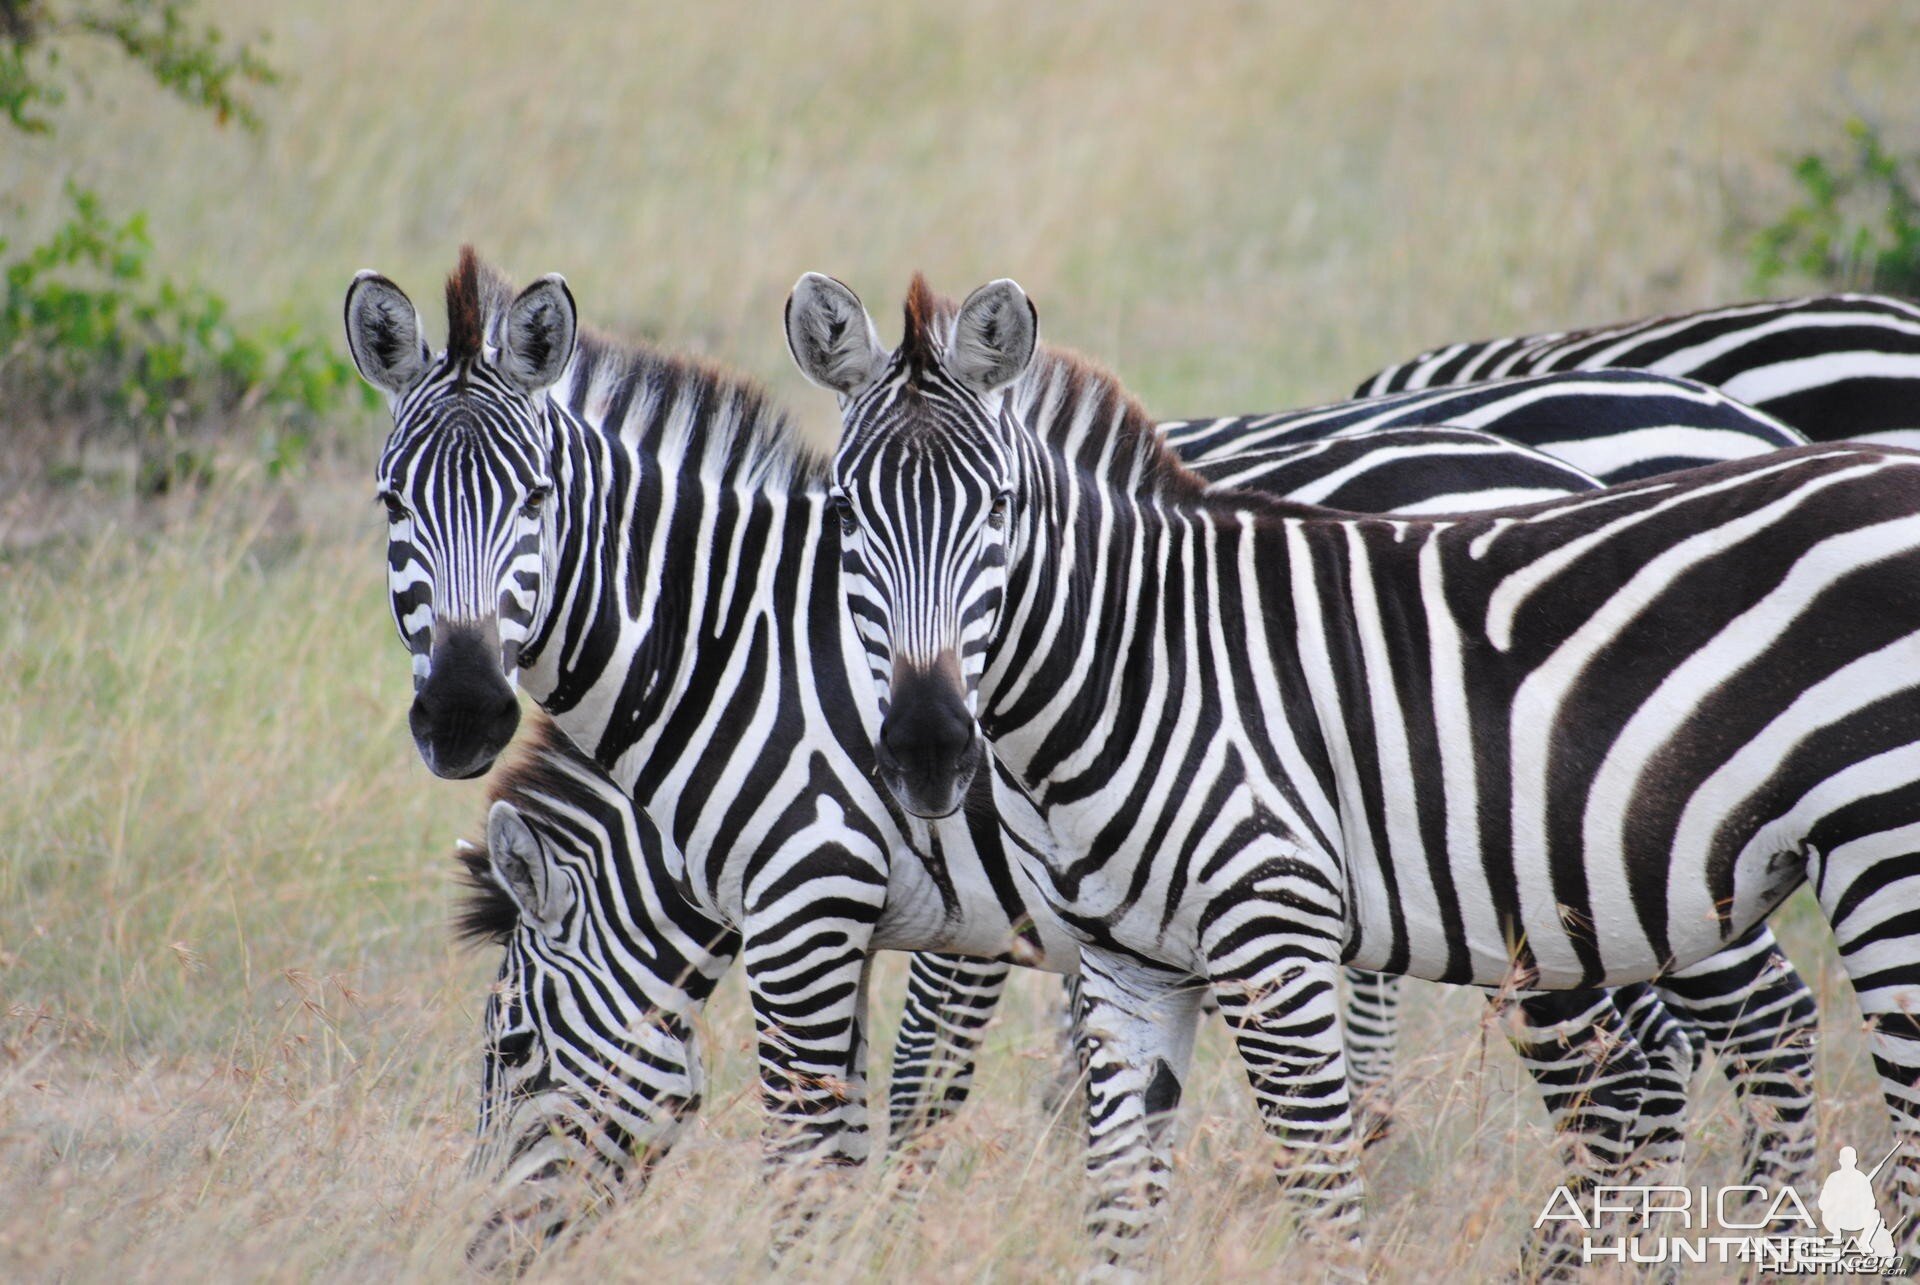 Zebras on the Masaai Mara in Kenya